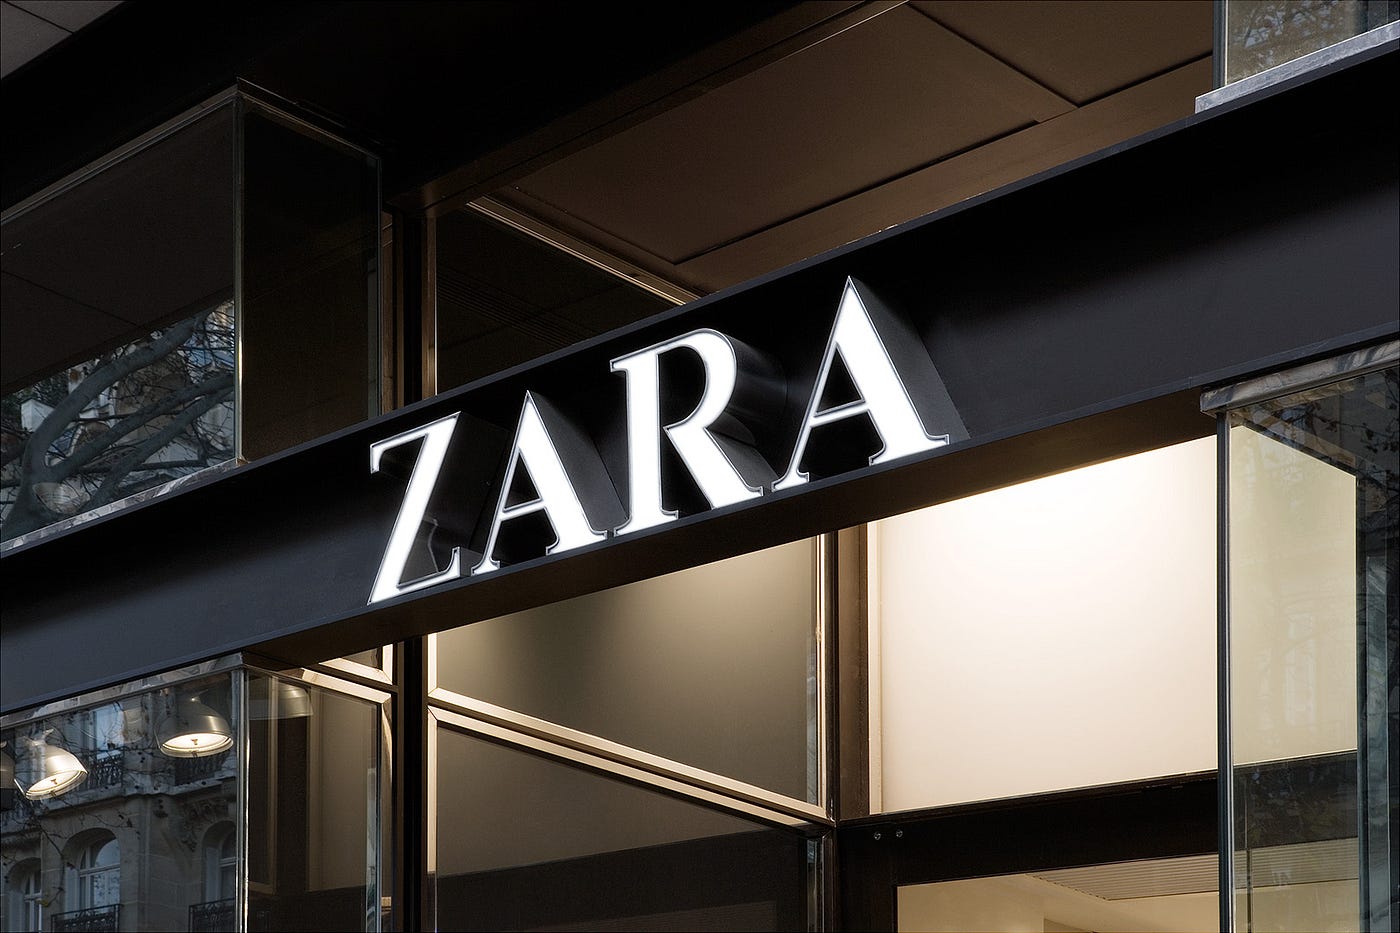 what makes zara successful